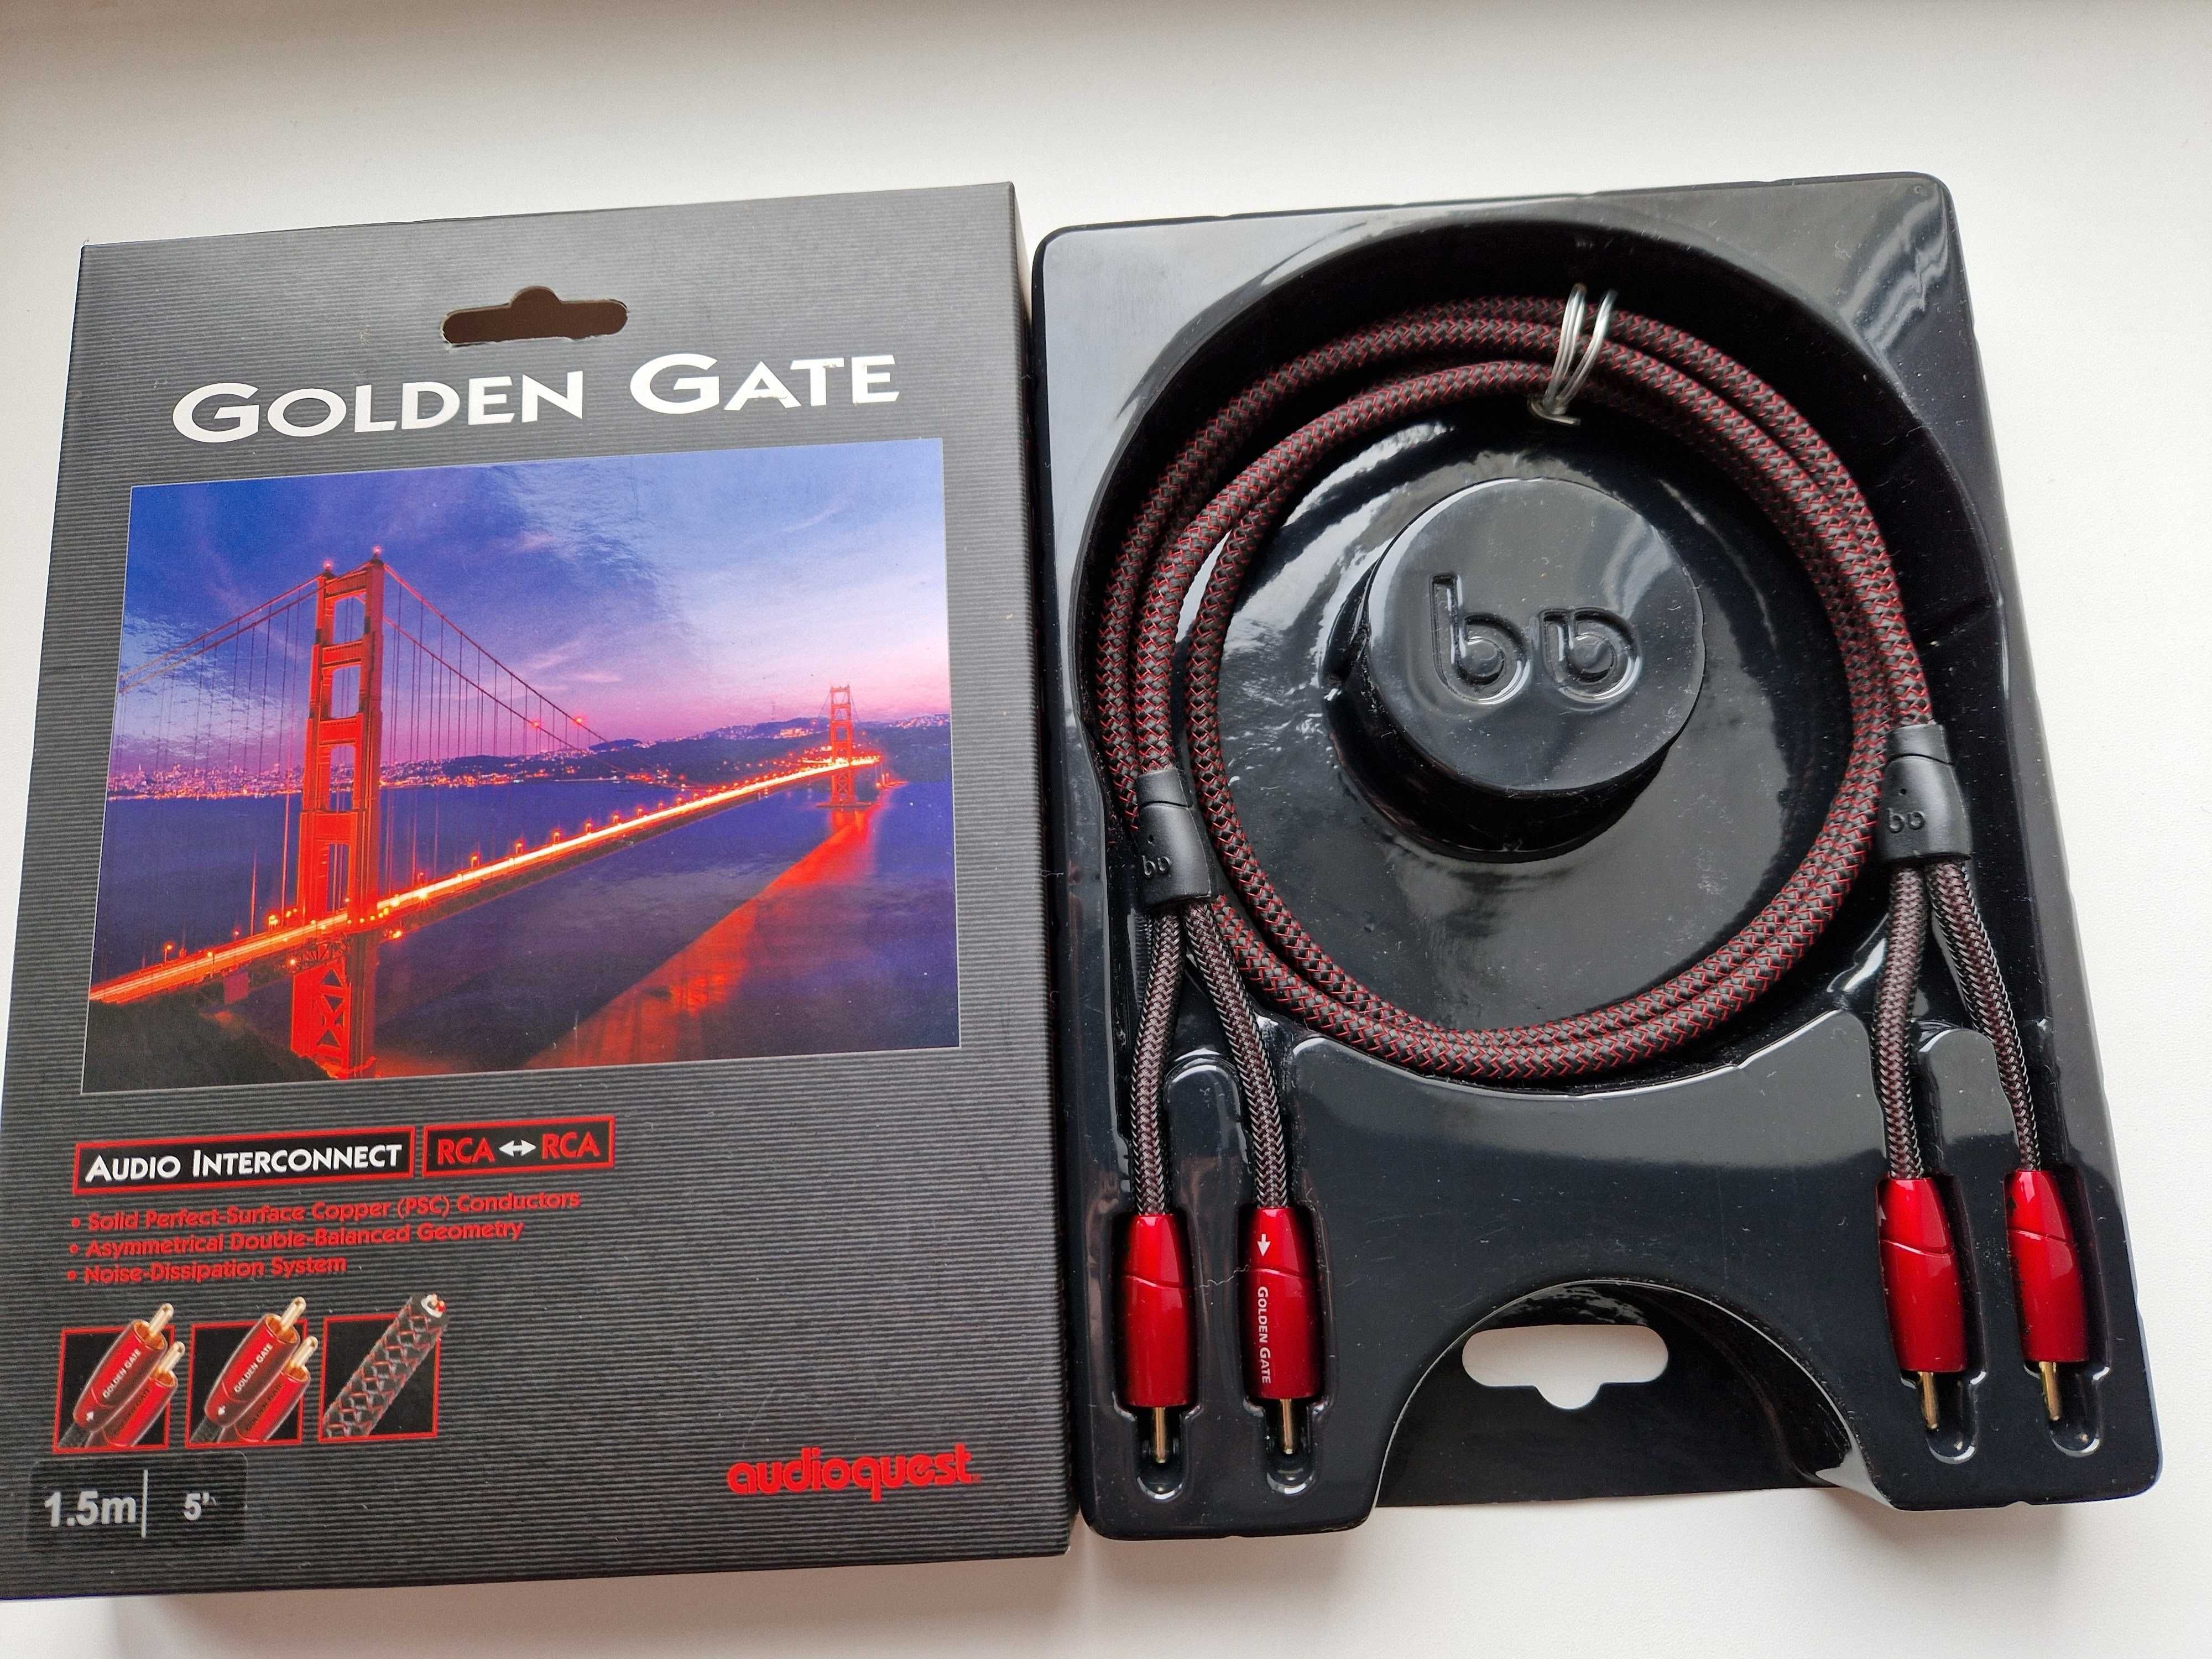 Audioquest Golden Gate RCA-RCA  1,5м ! межблочный кабель